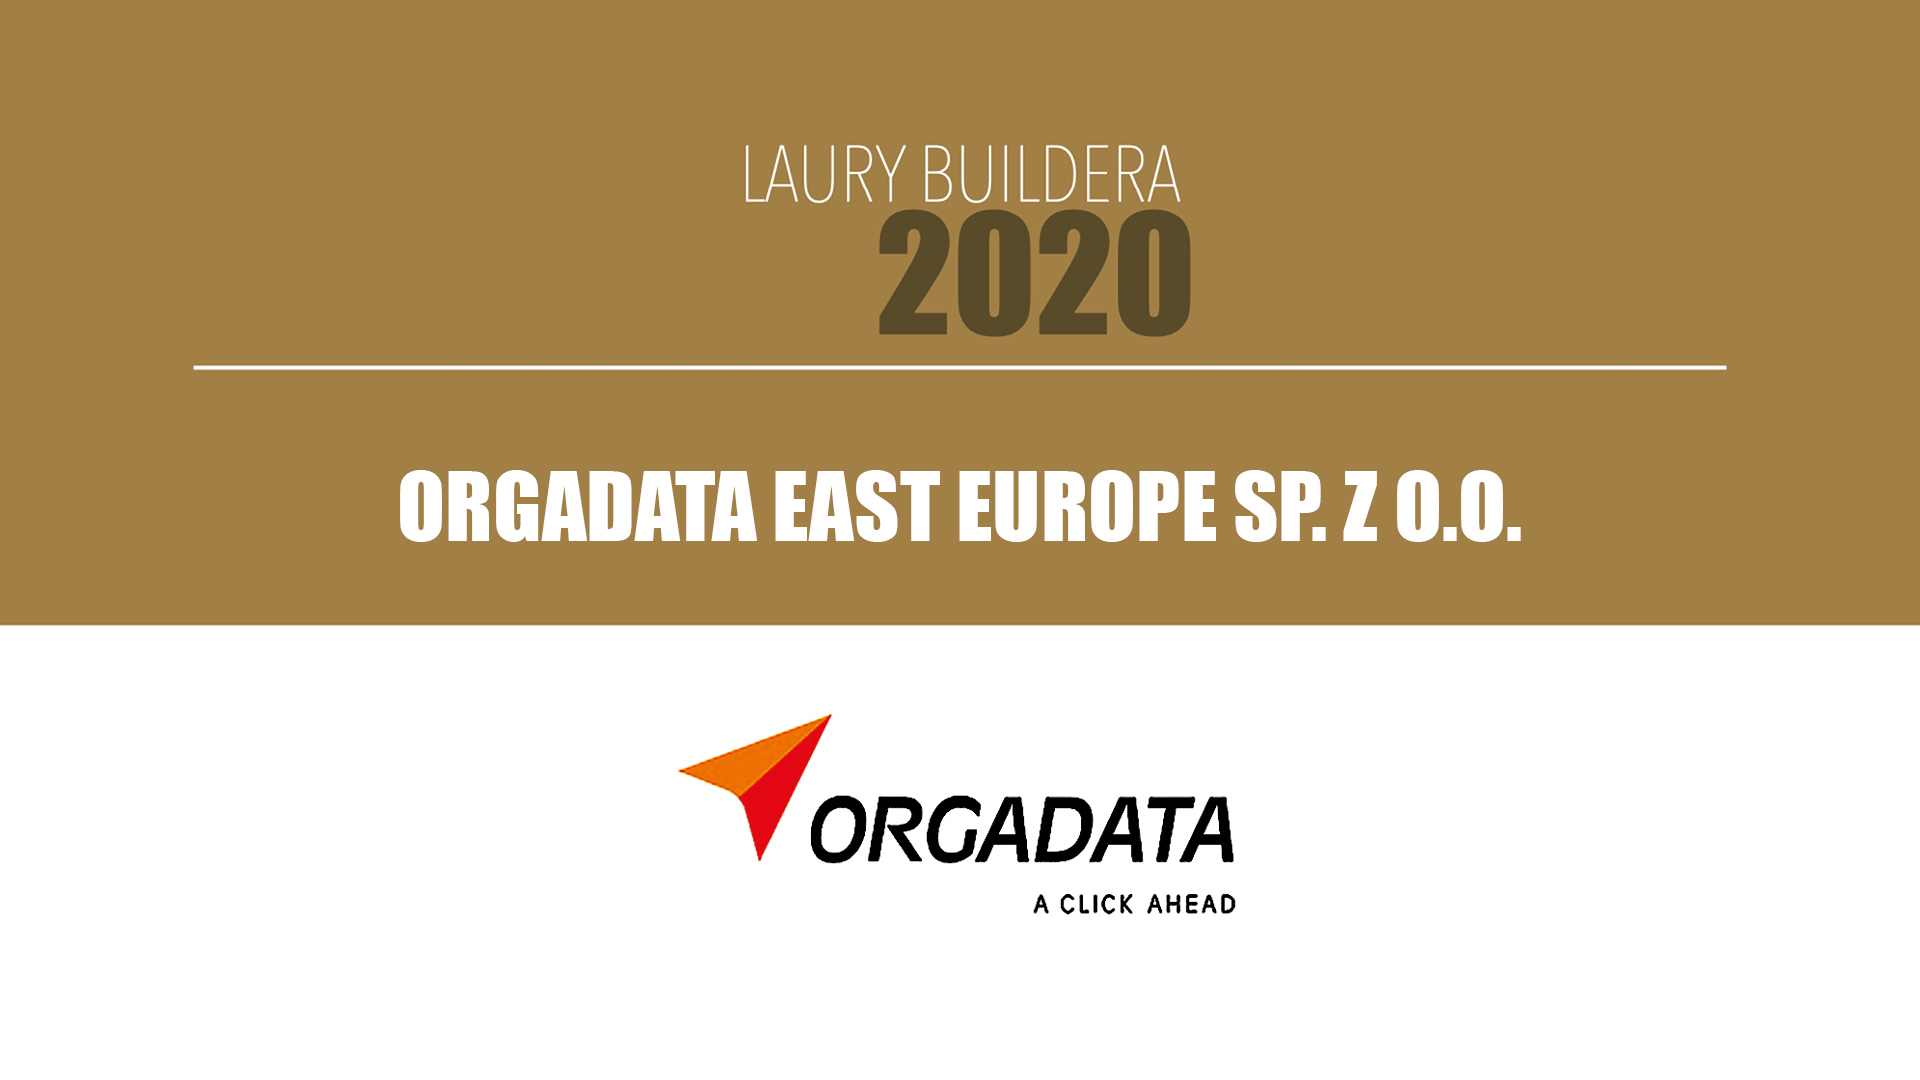 ORGADATA EAST EUROPE SP. Z O.O. – LAURY BUILDERA 2020